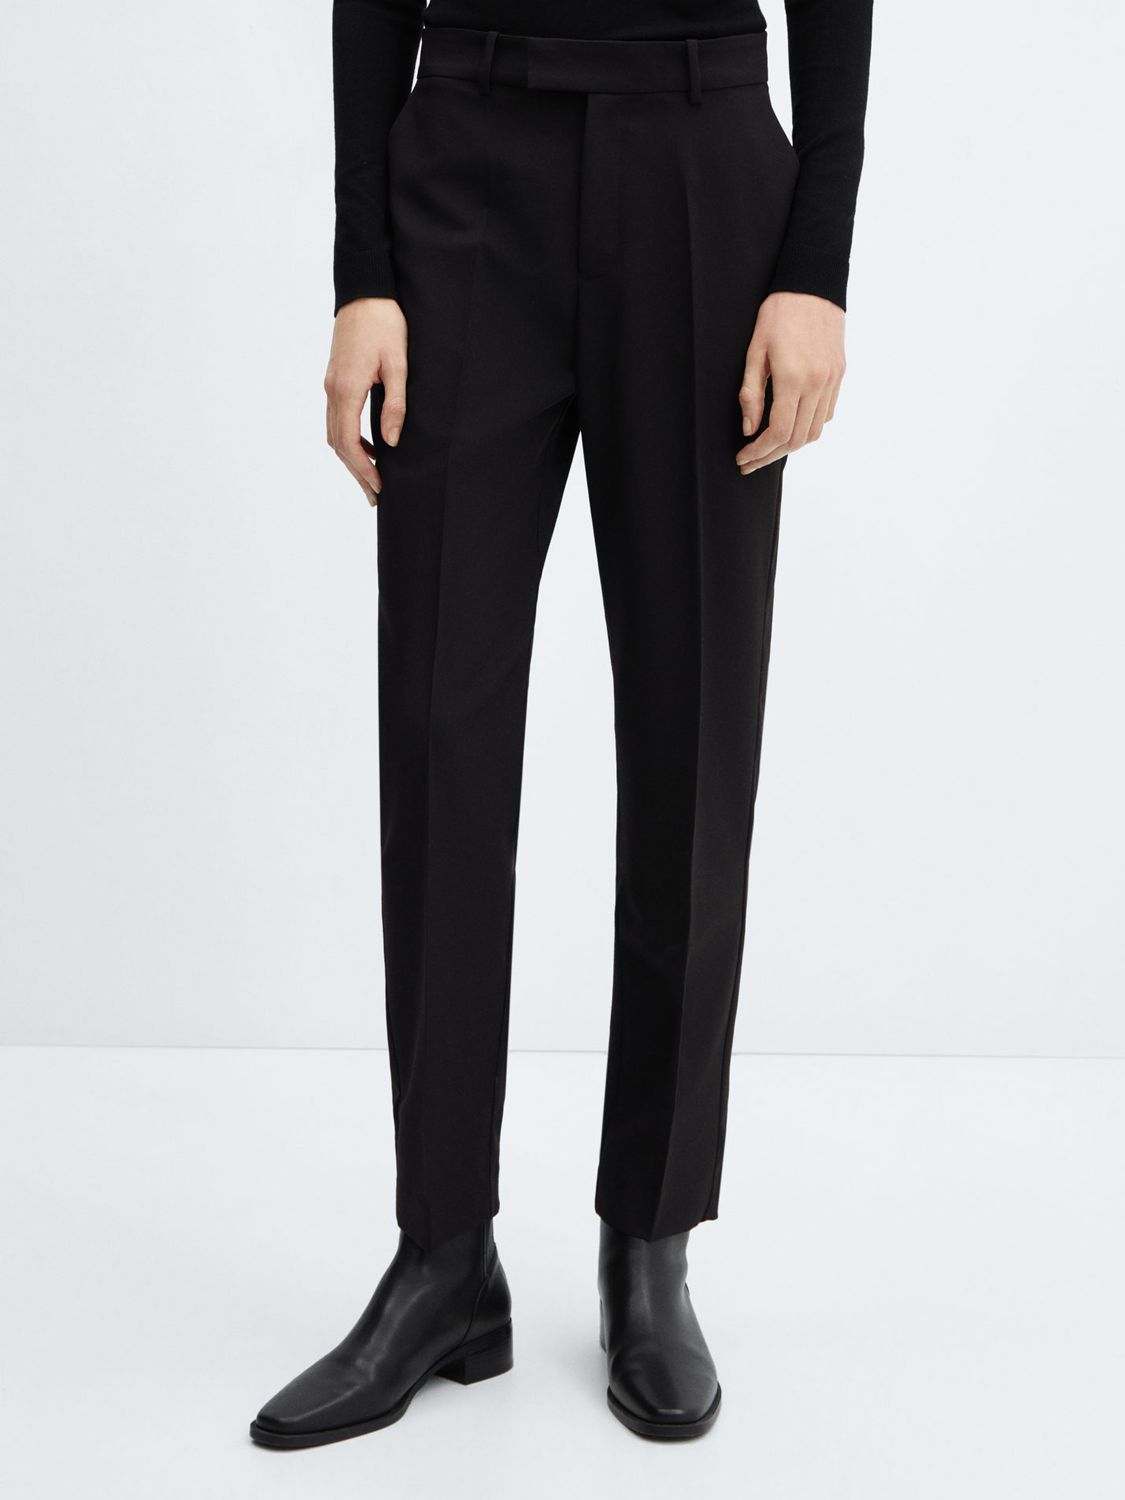 Mango Straight Suit Trousers, Black at John Lewis & Partners